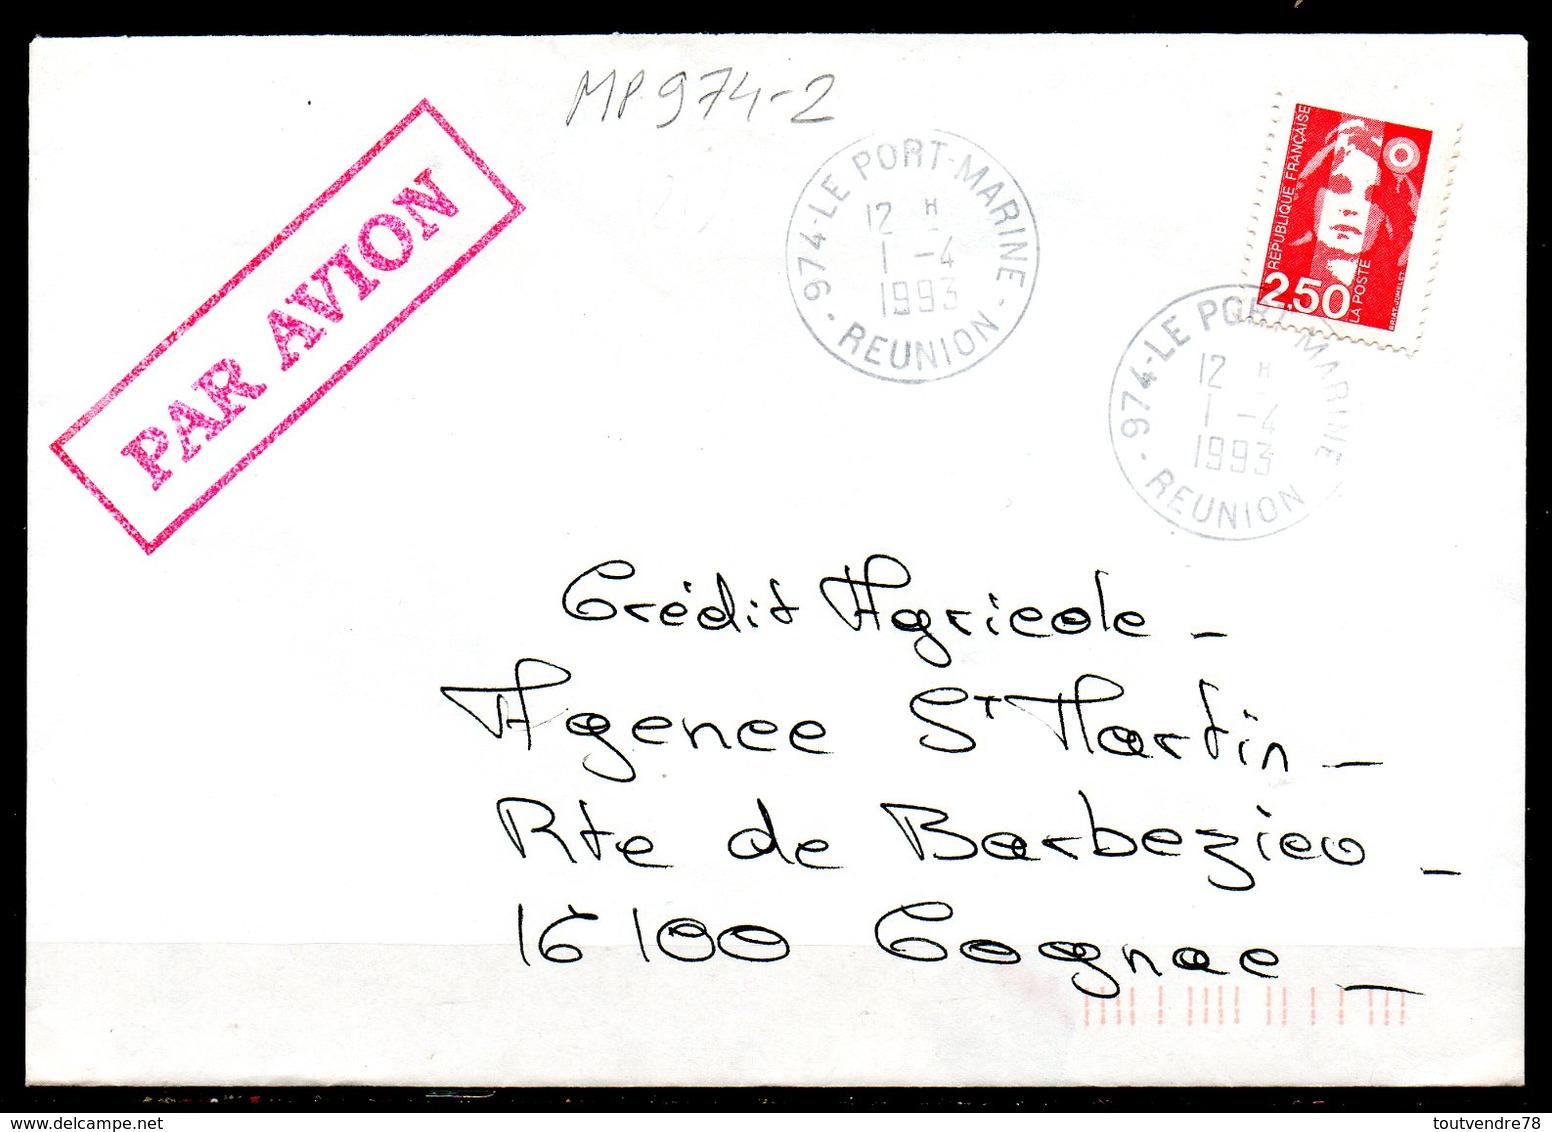 MP974-2 / Dept 974 (Réunion ) LE PORT MARINE 1992 > Cachet Type A9 - Manual Postmarks